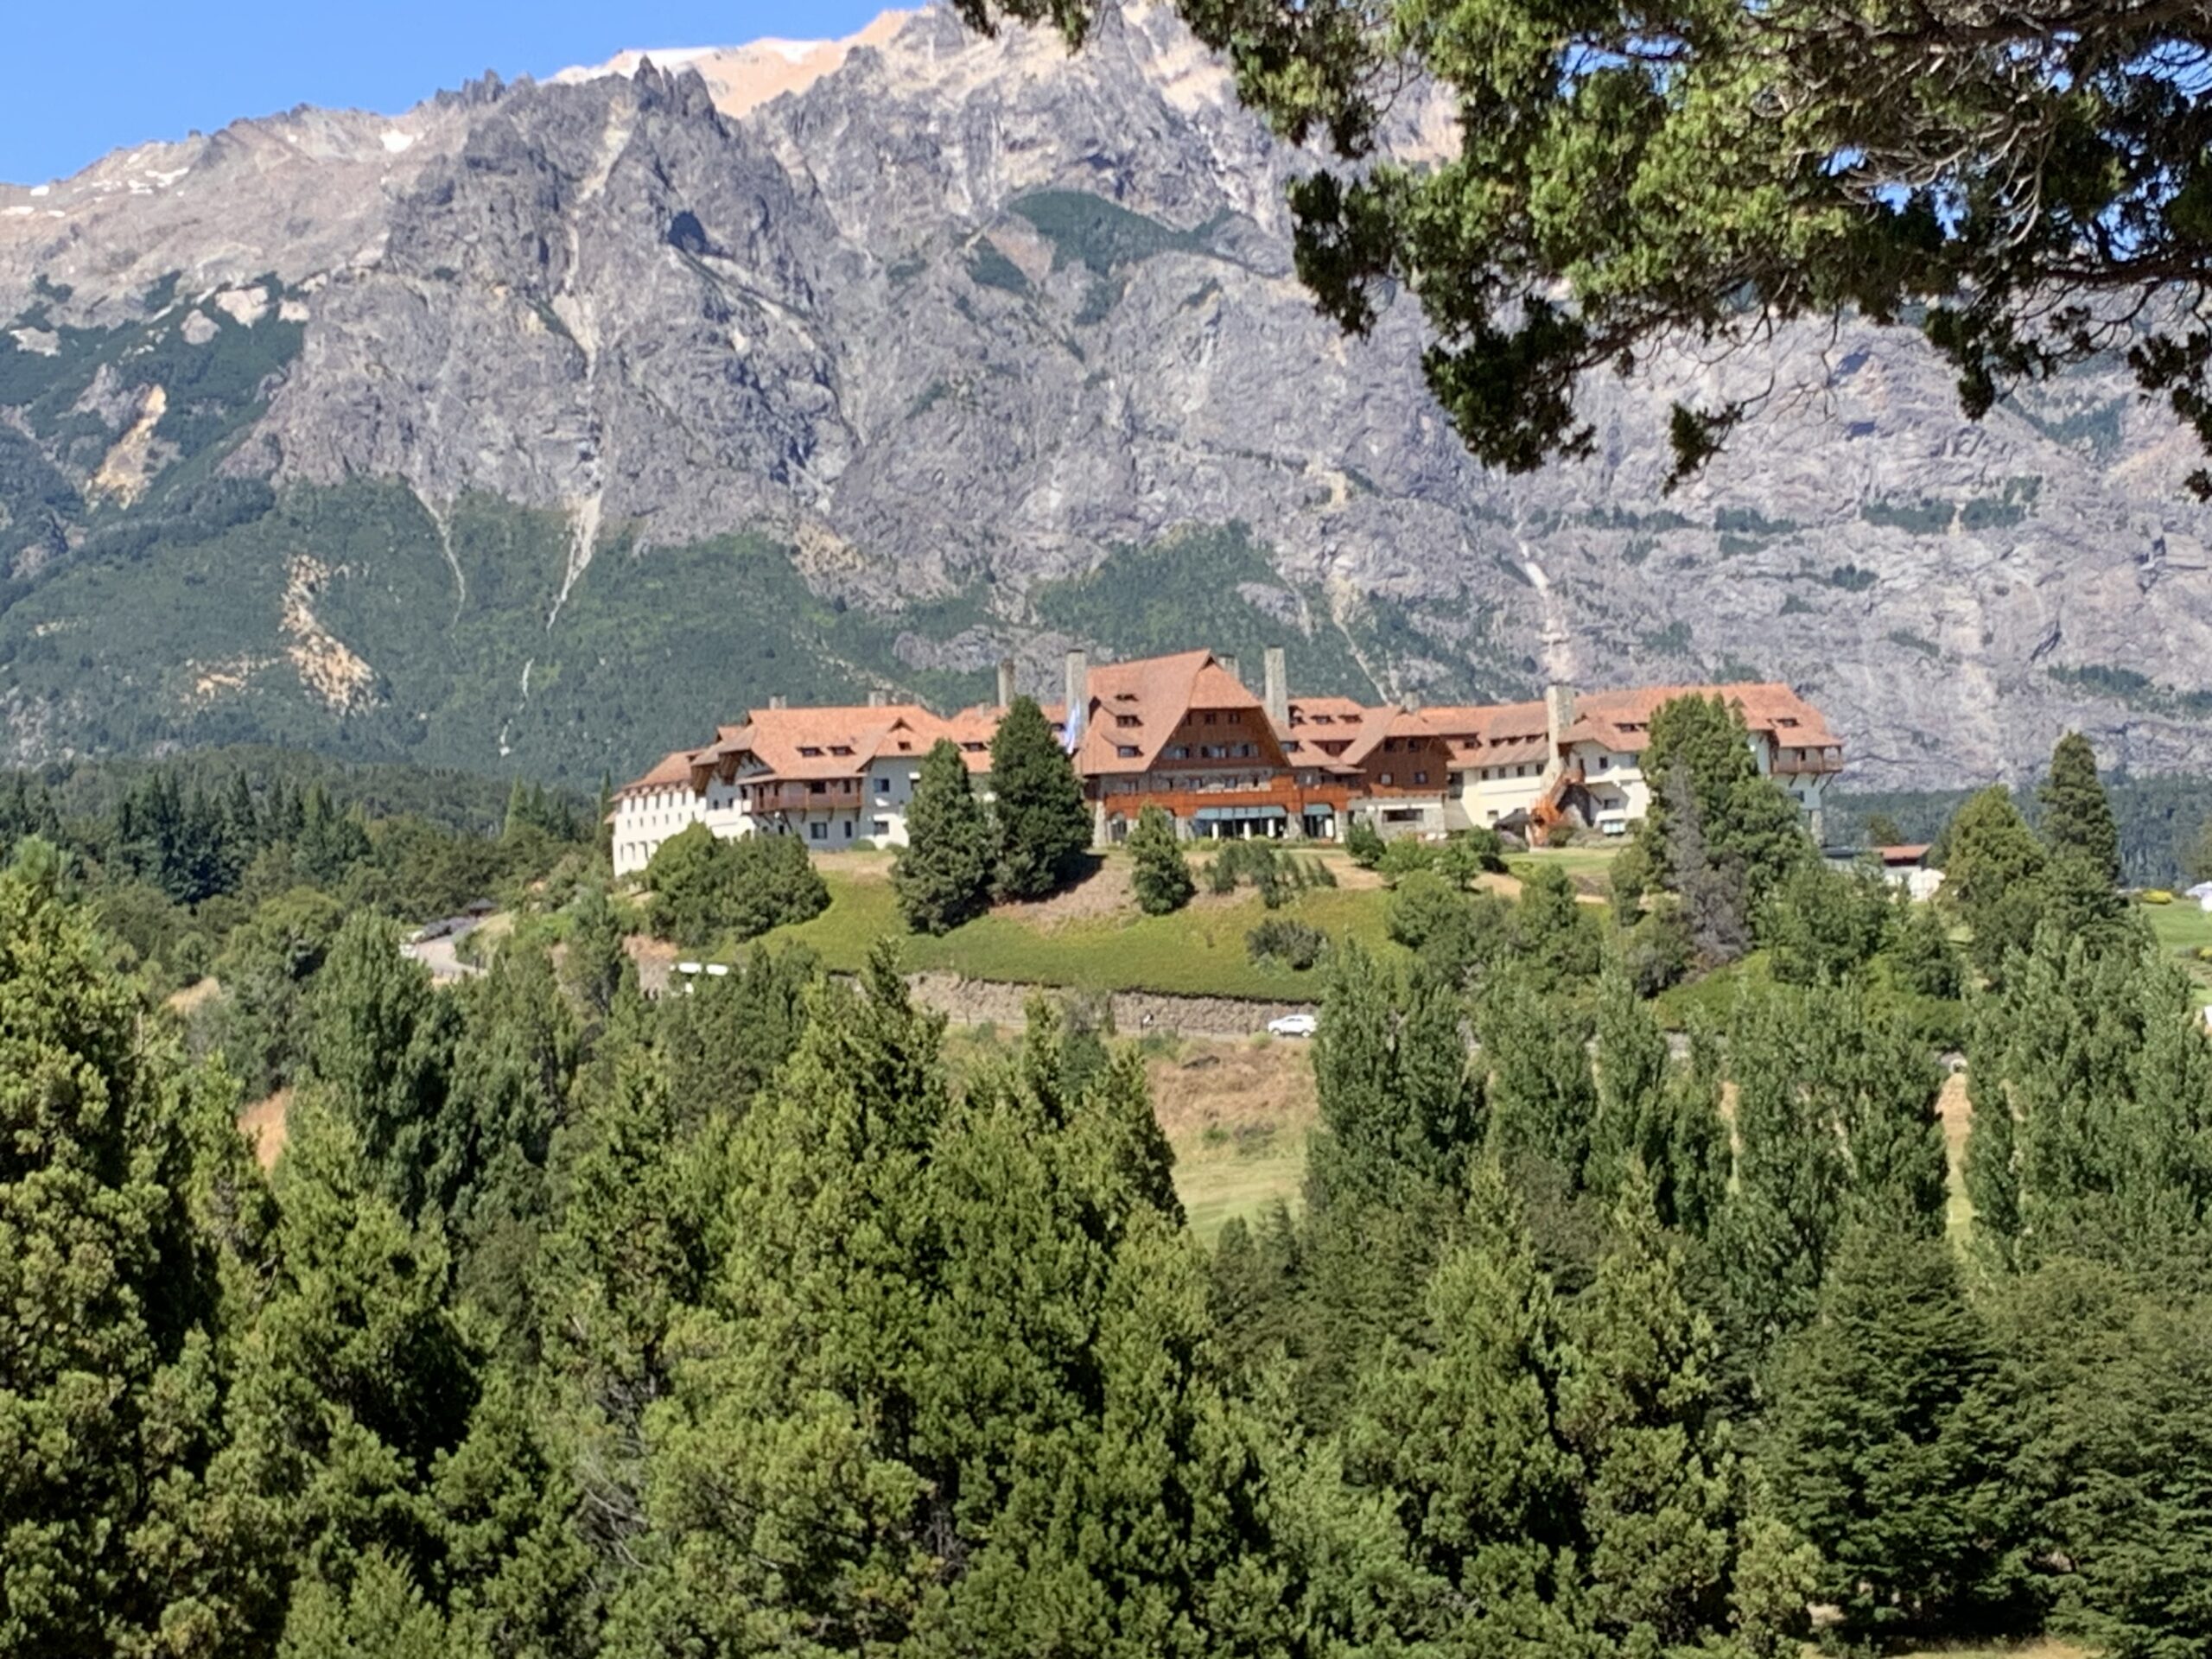 Llao Llao Hotel, Bariloche, Argentina